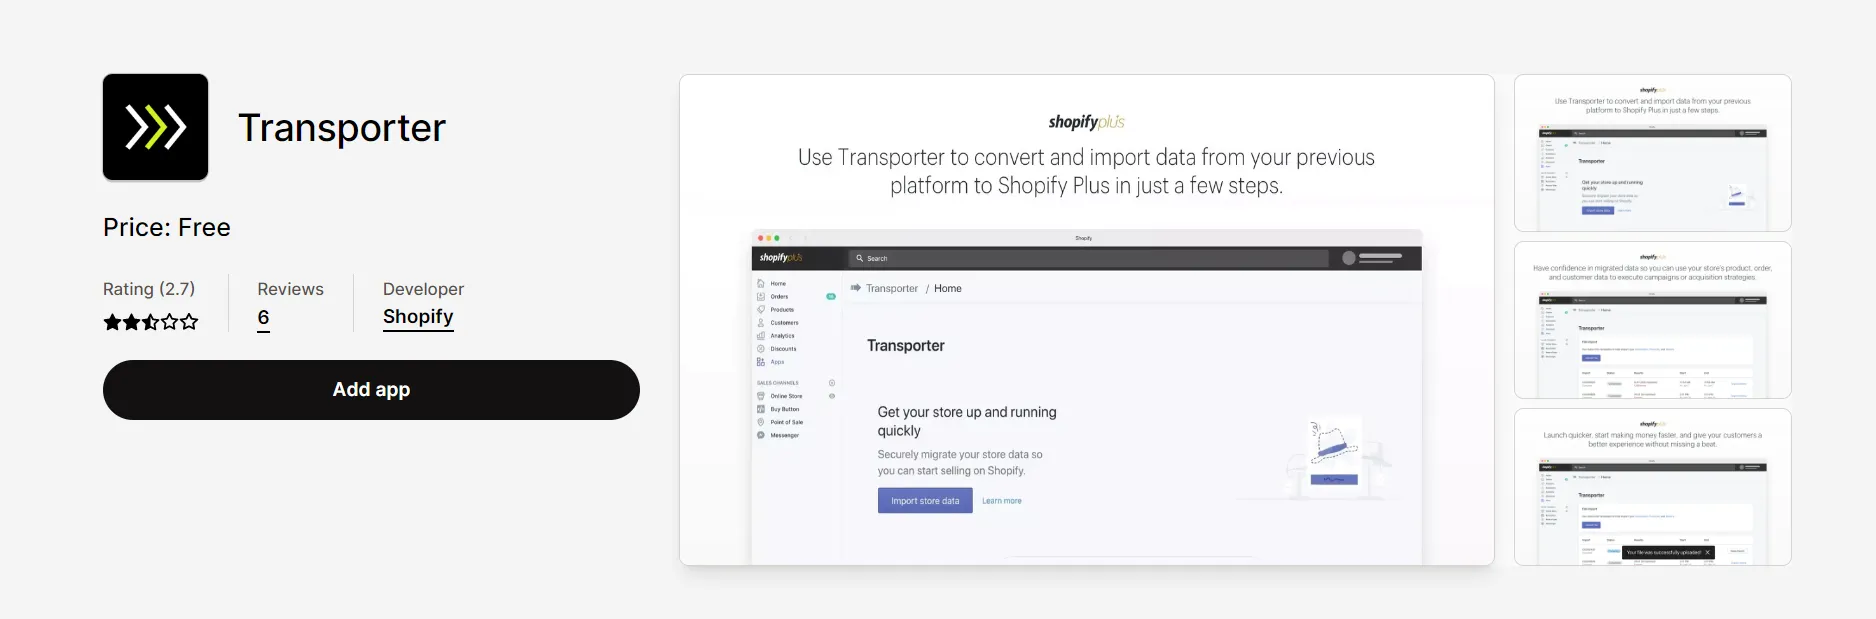 Shopify Transporter App